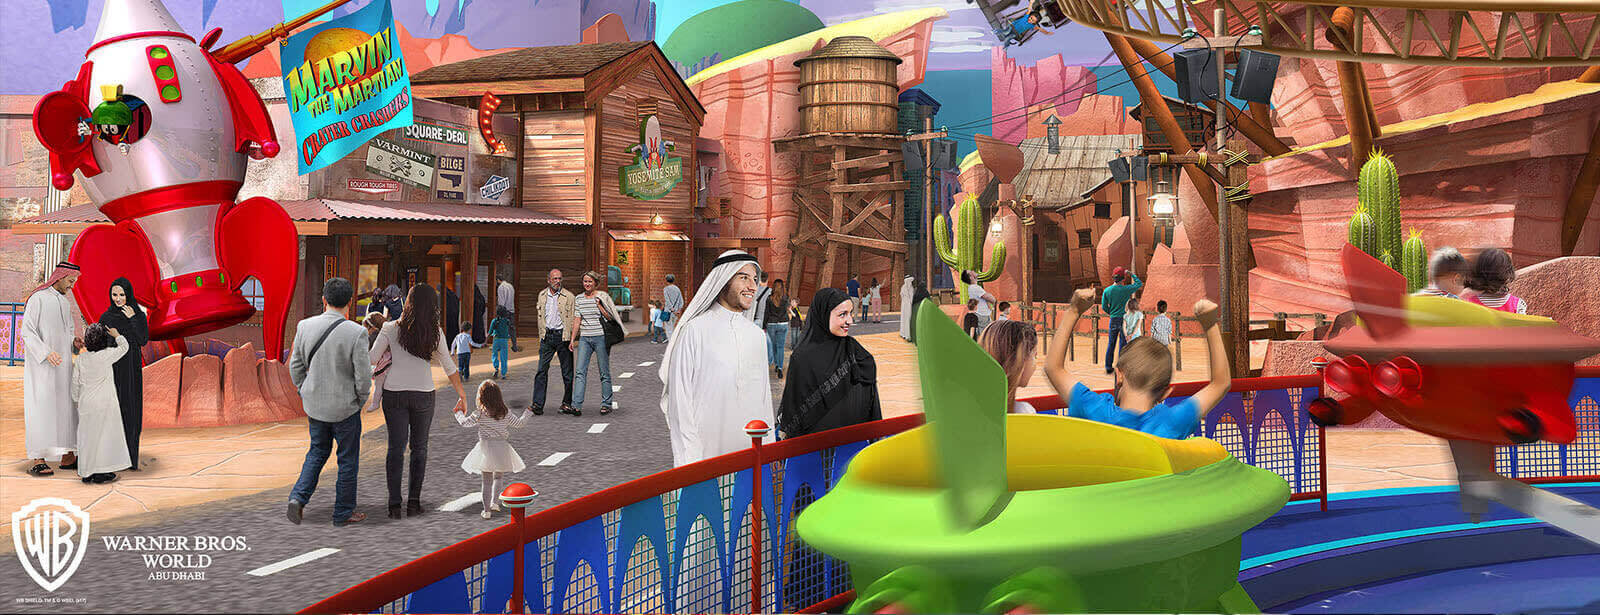 Warner Bros World Abu Dhabi will become your favorite nostalgic hit